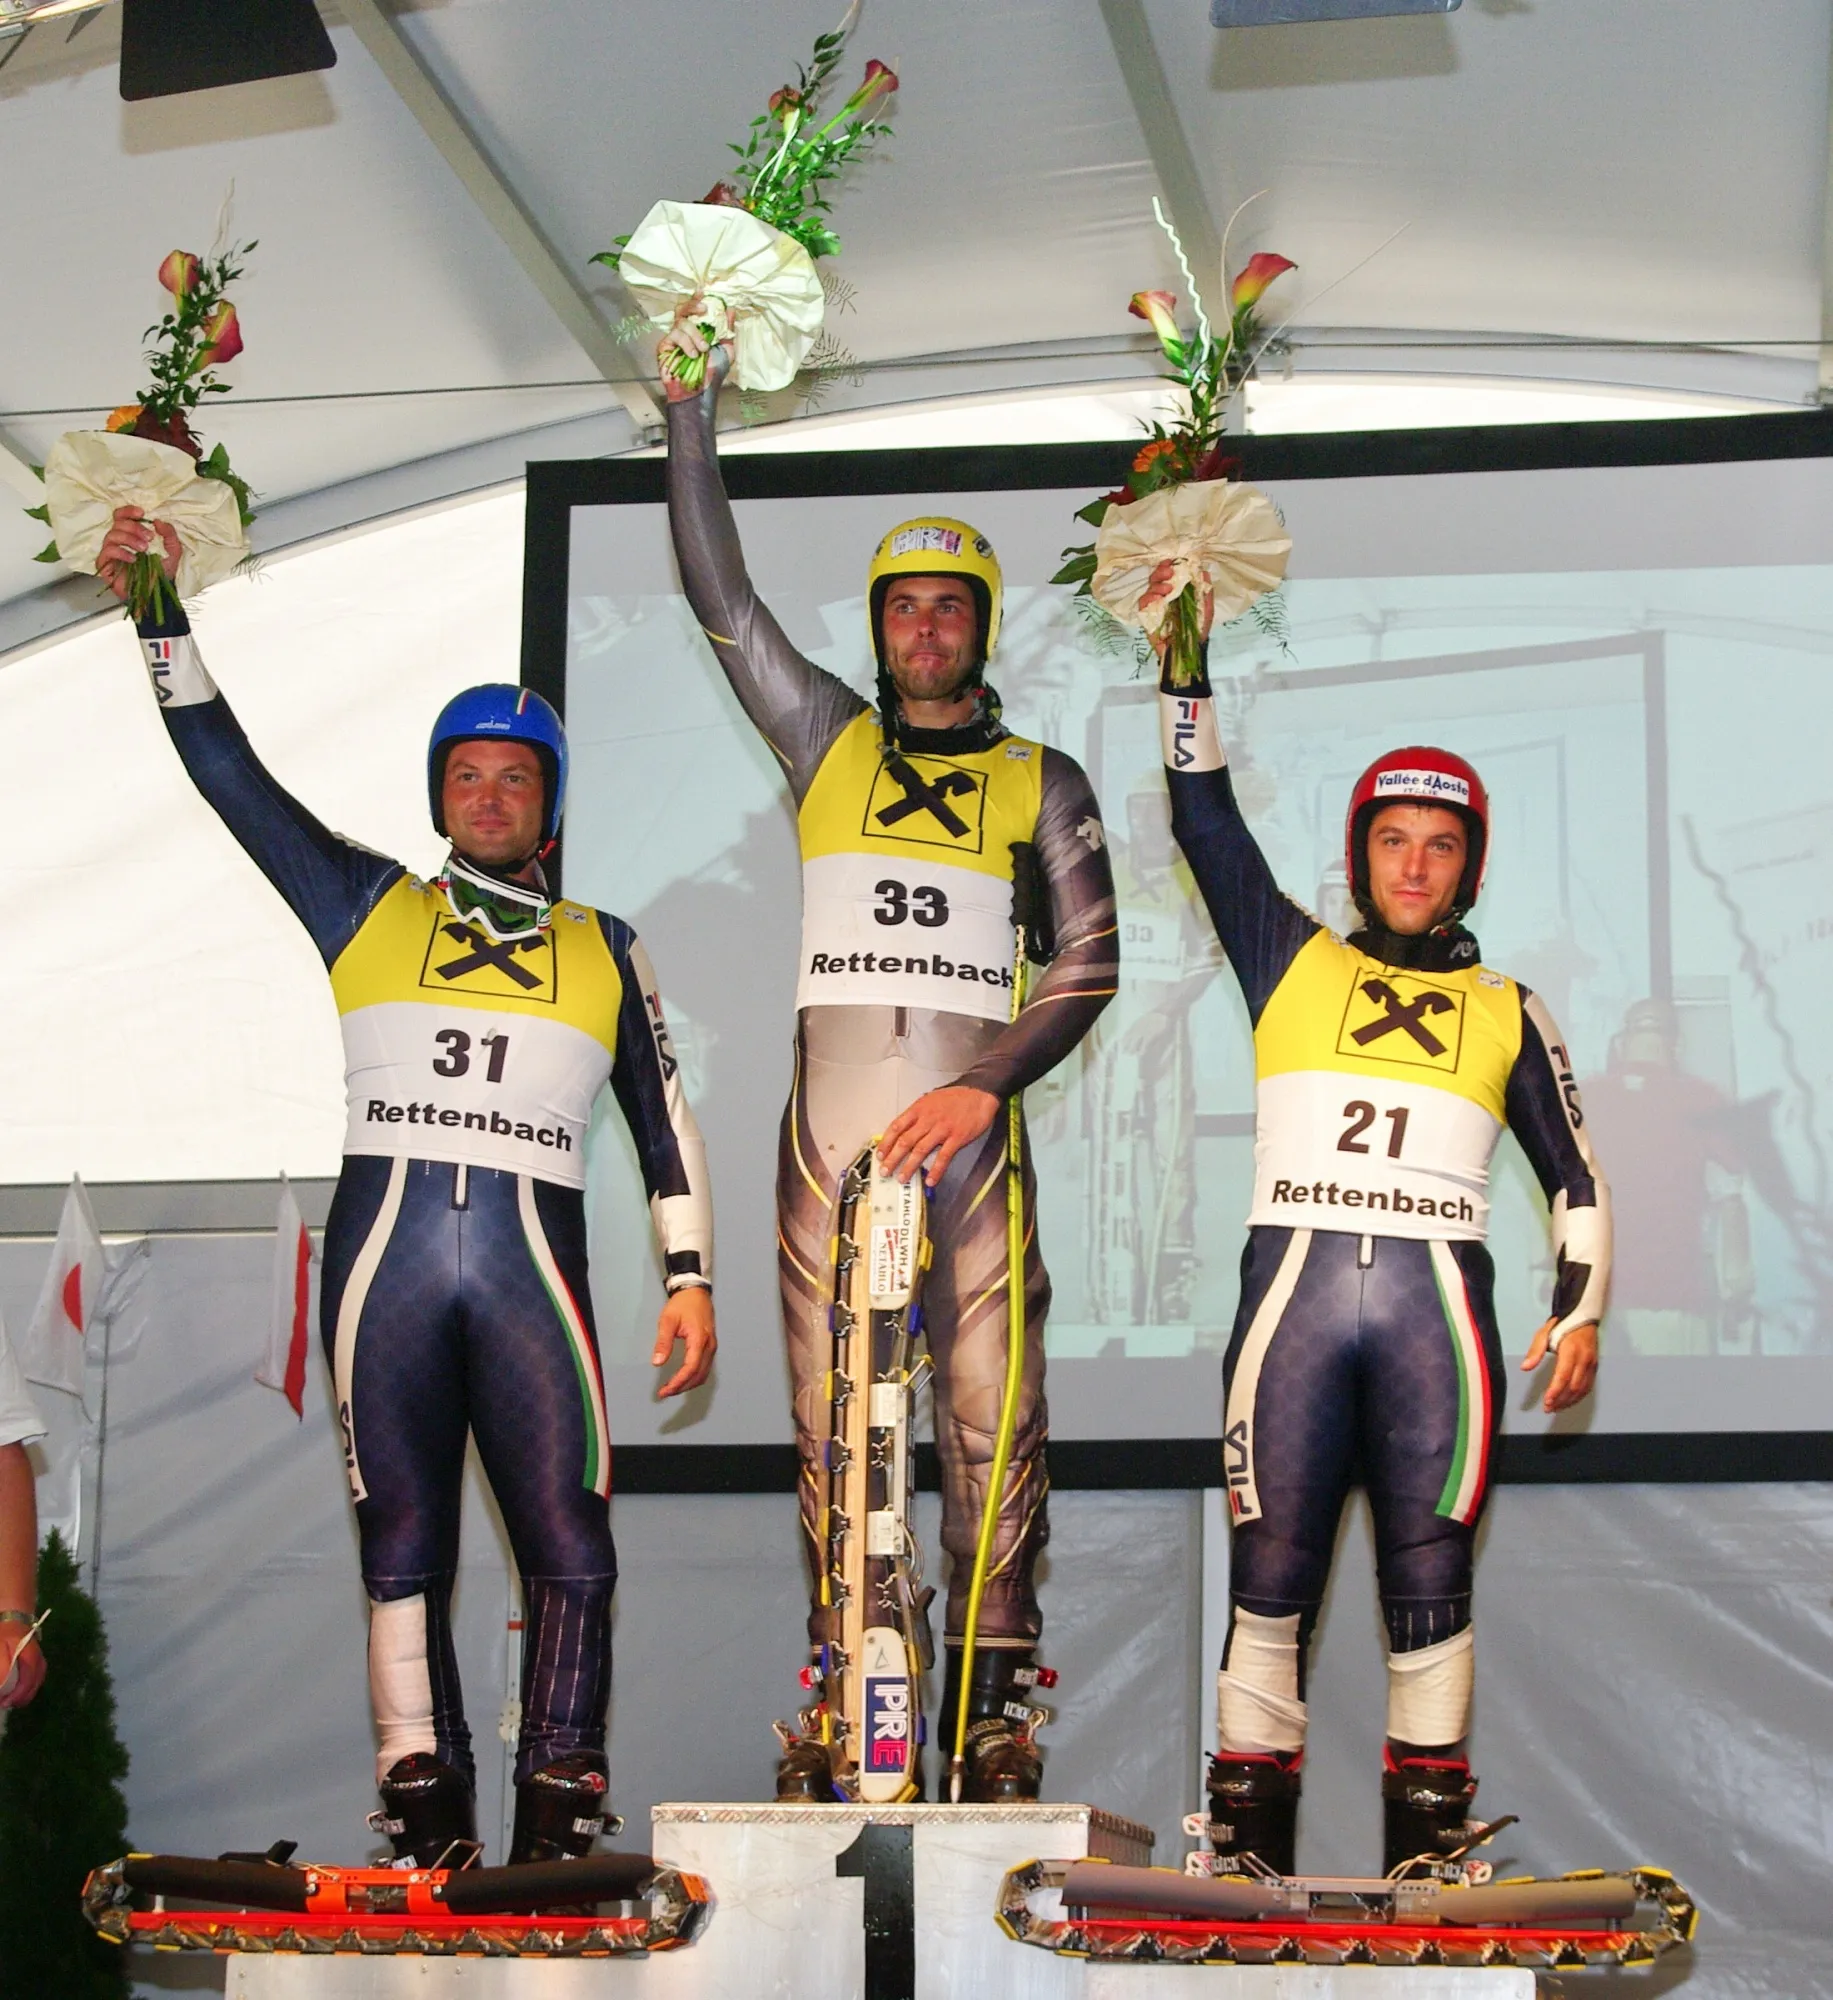 Photo showing: Grass Skiing World Championships 2009 in Rettenbach, Austria. Men's Giant Slalom, Flower Ceremony: 1st Place: Jan Němec (CZE), 2nd Place: Stefano Sartori (ITA), 3rd Place: Edoardo Frau (ITA)